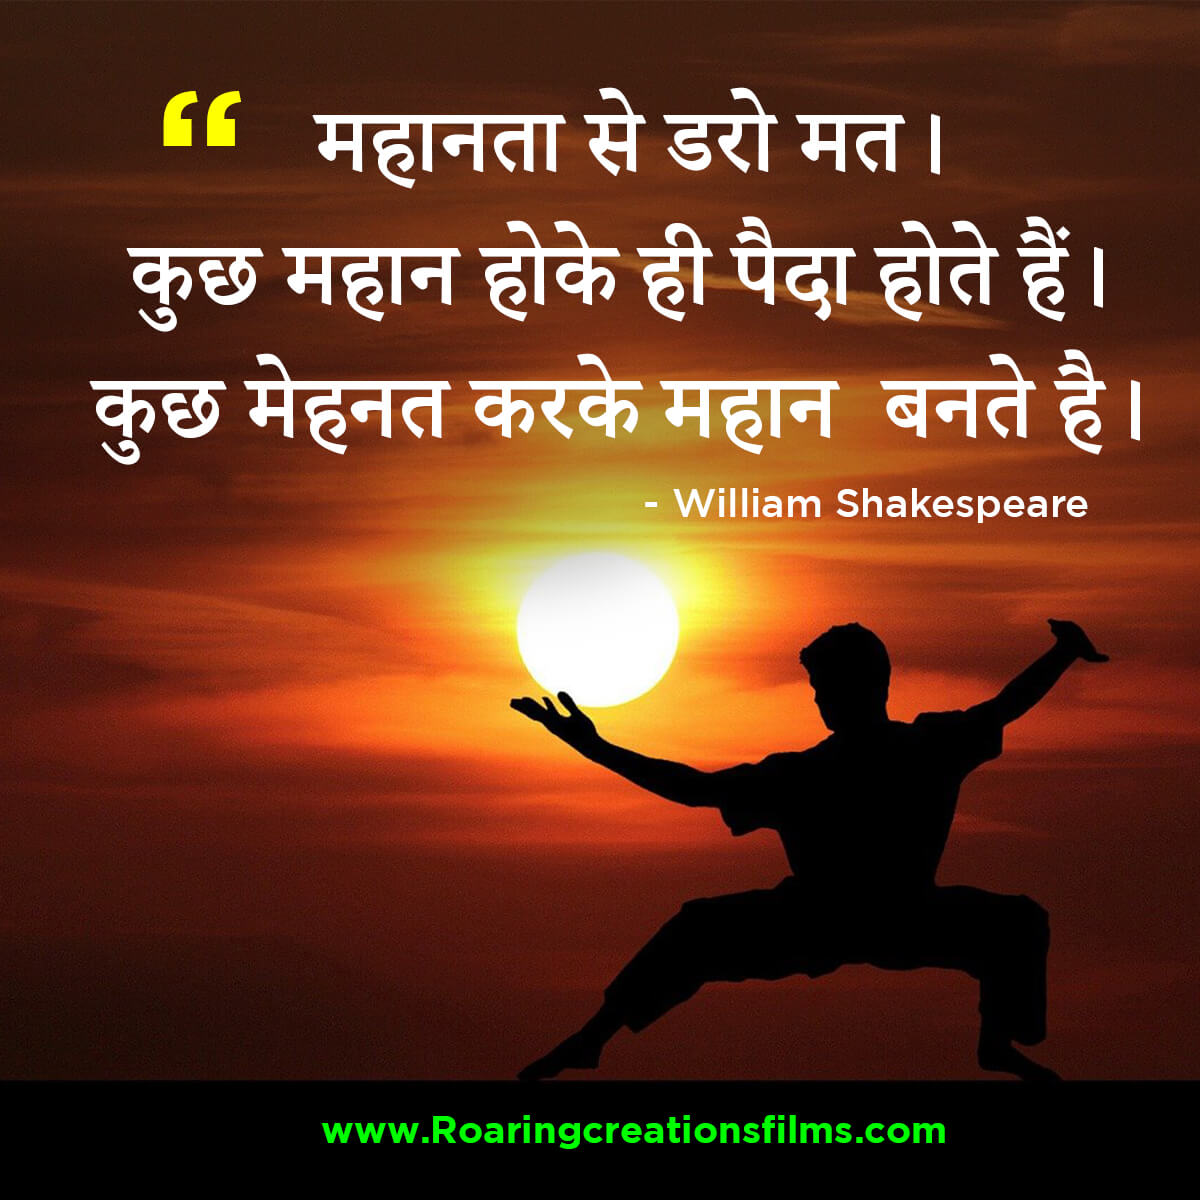 Best Quotes of William Shakespeare Quotes in Hindi, success quotes in hindi, motivational quotes in hindi